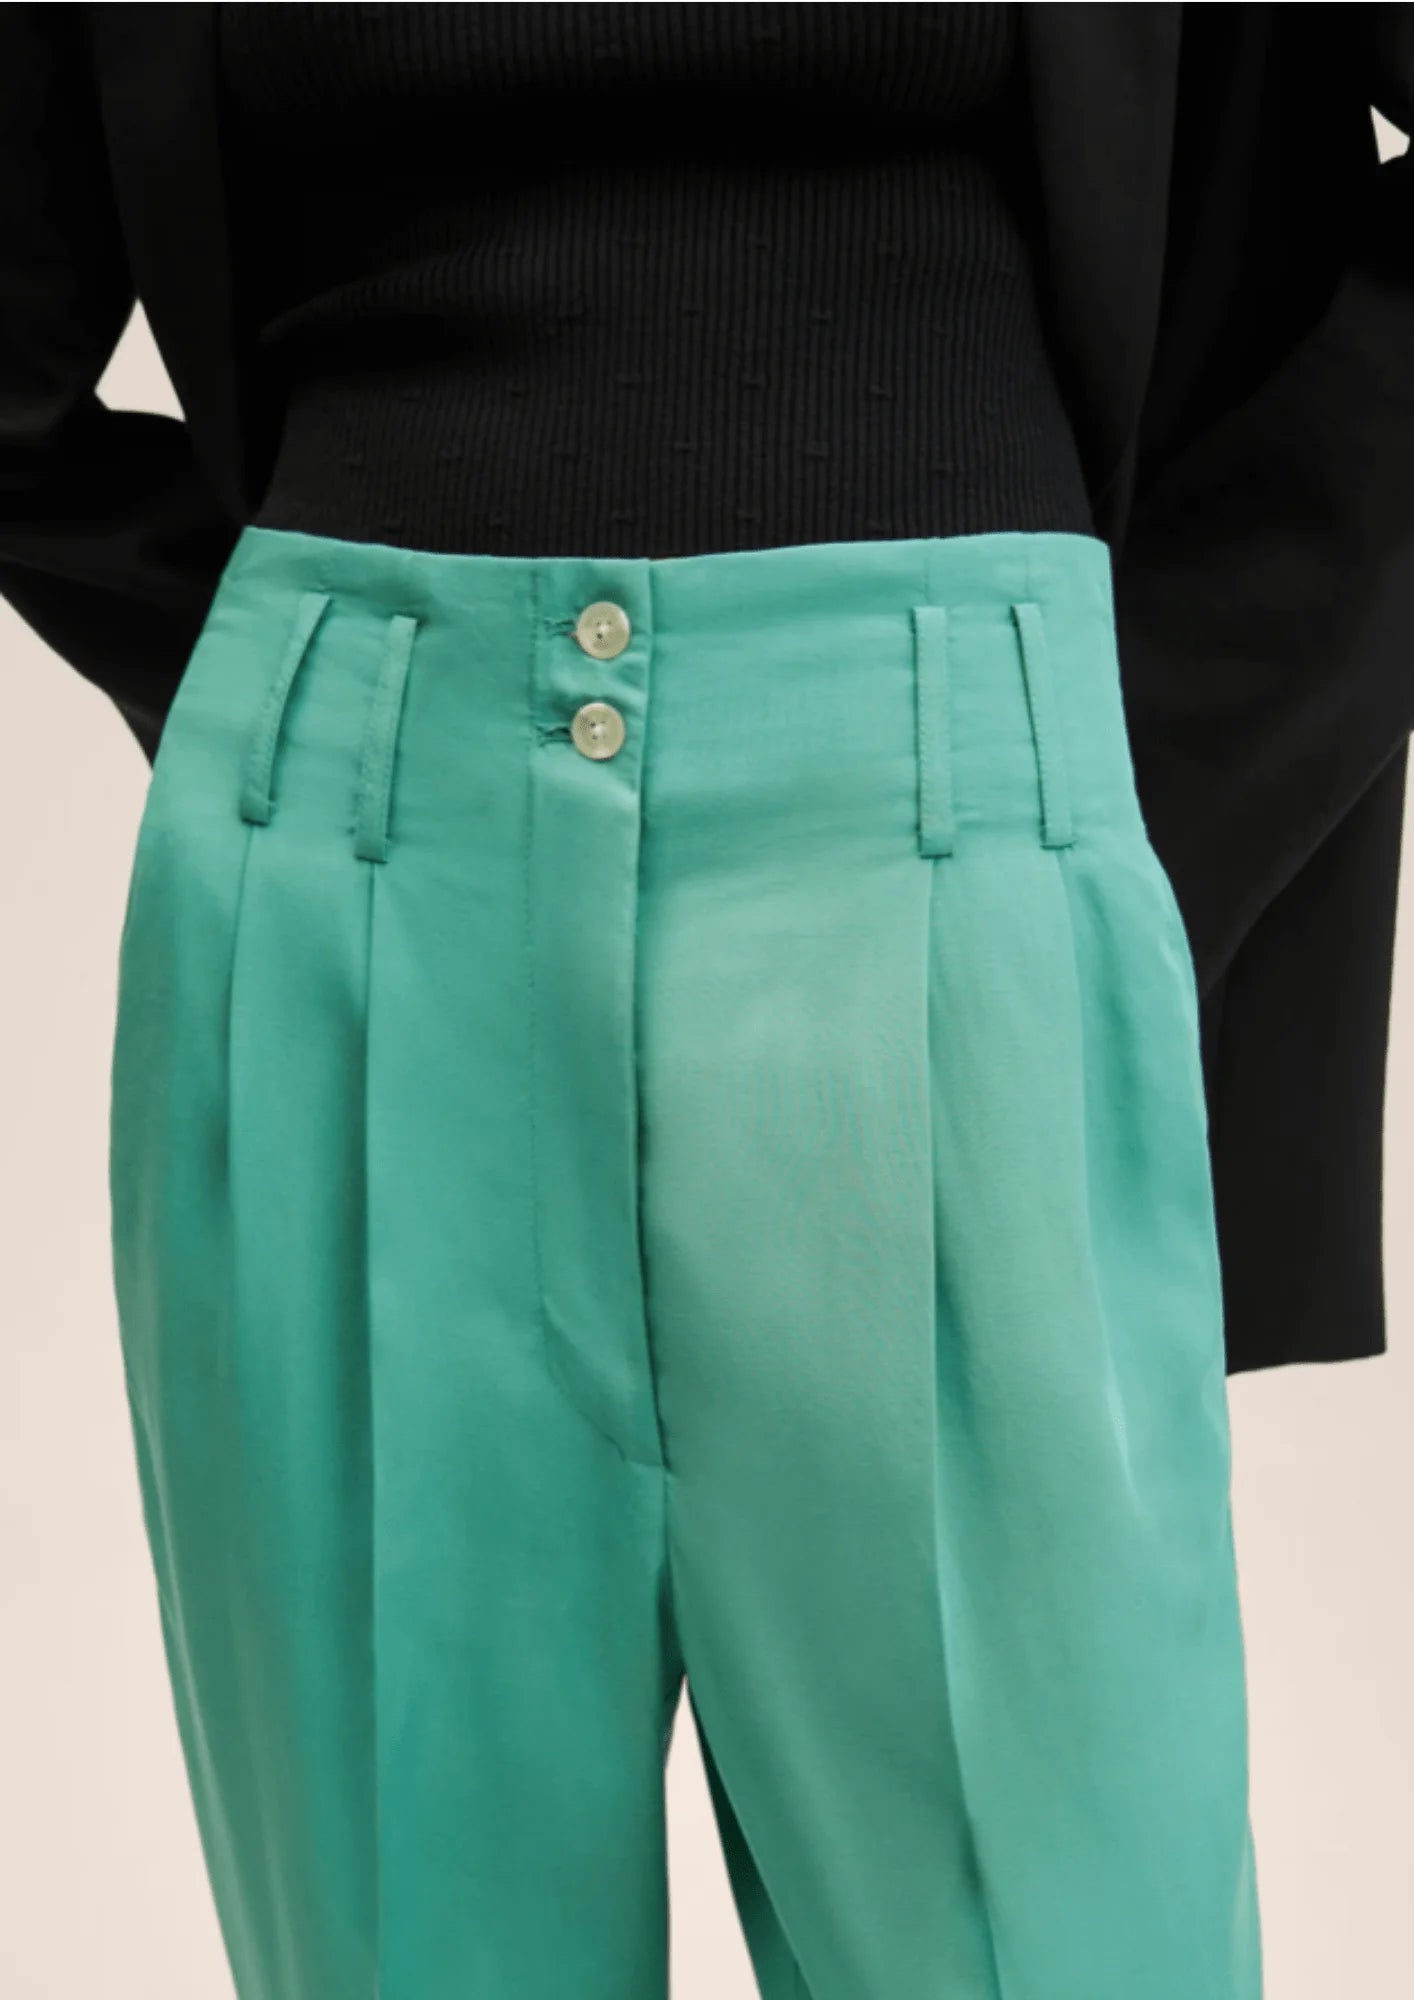 Pantalon de fléchettes vert aqua